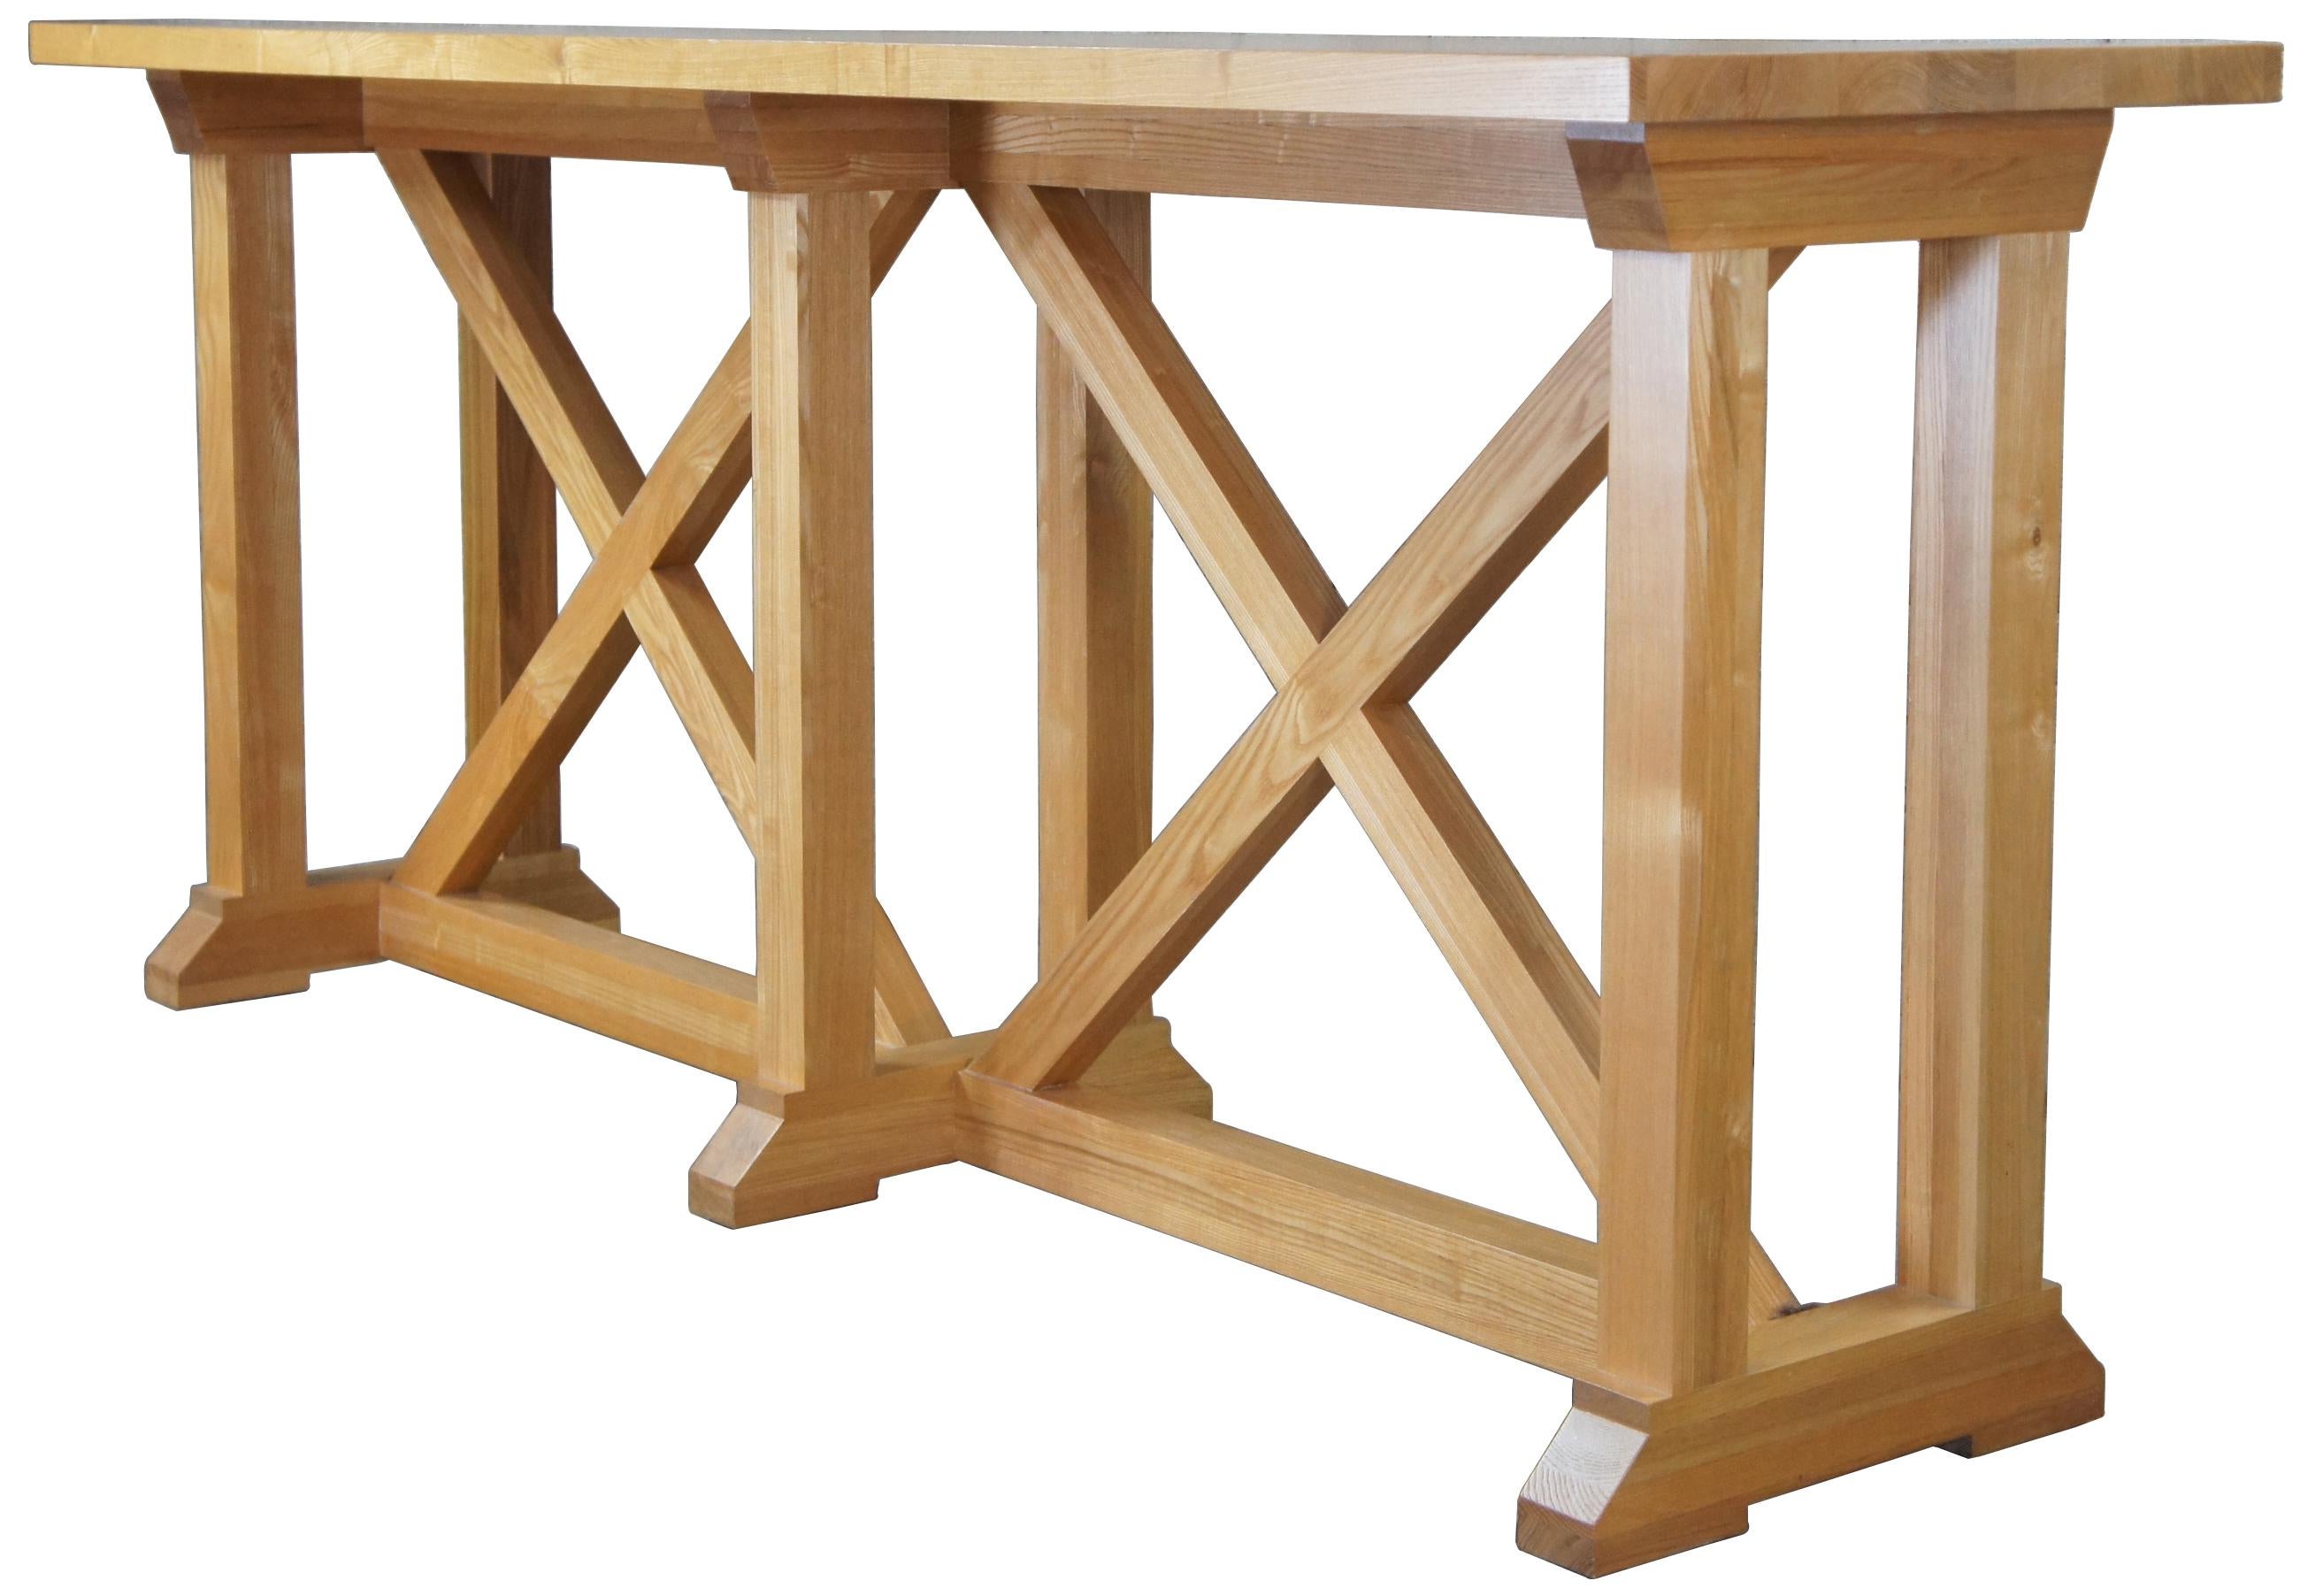 Vintage Lauren Ralph Lauren L/Studio case table. Made of oak with double X base and three legs. 300-46, 4467400821. Measure: 78